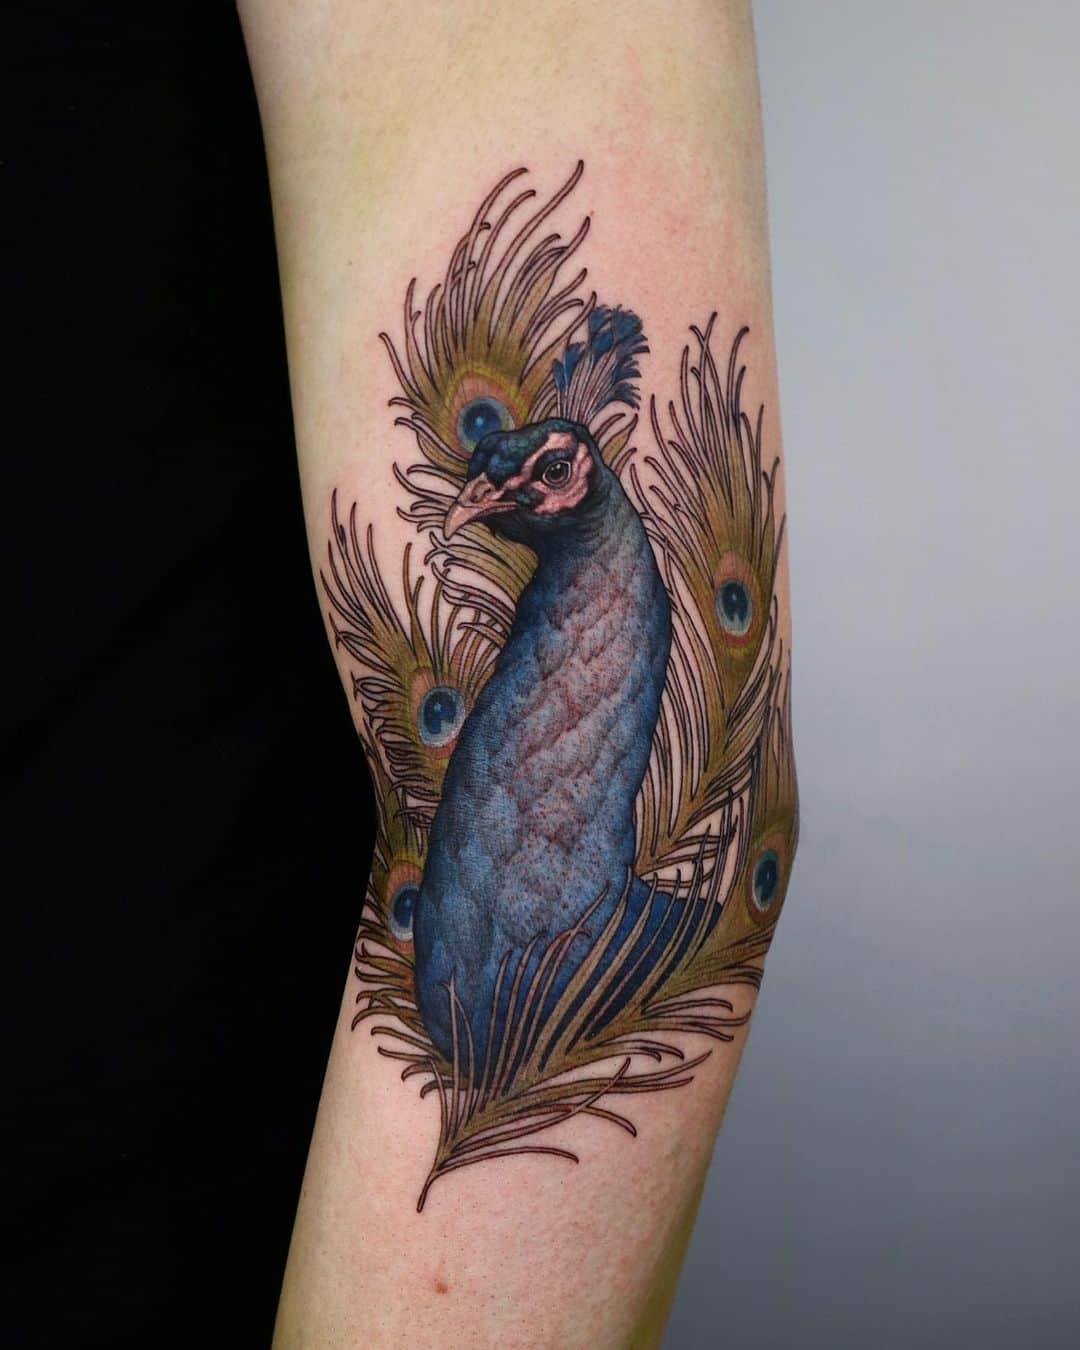 Peaconk tattooo by swan tattooer